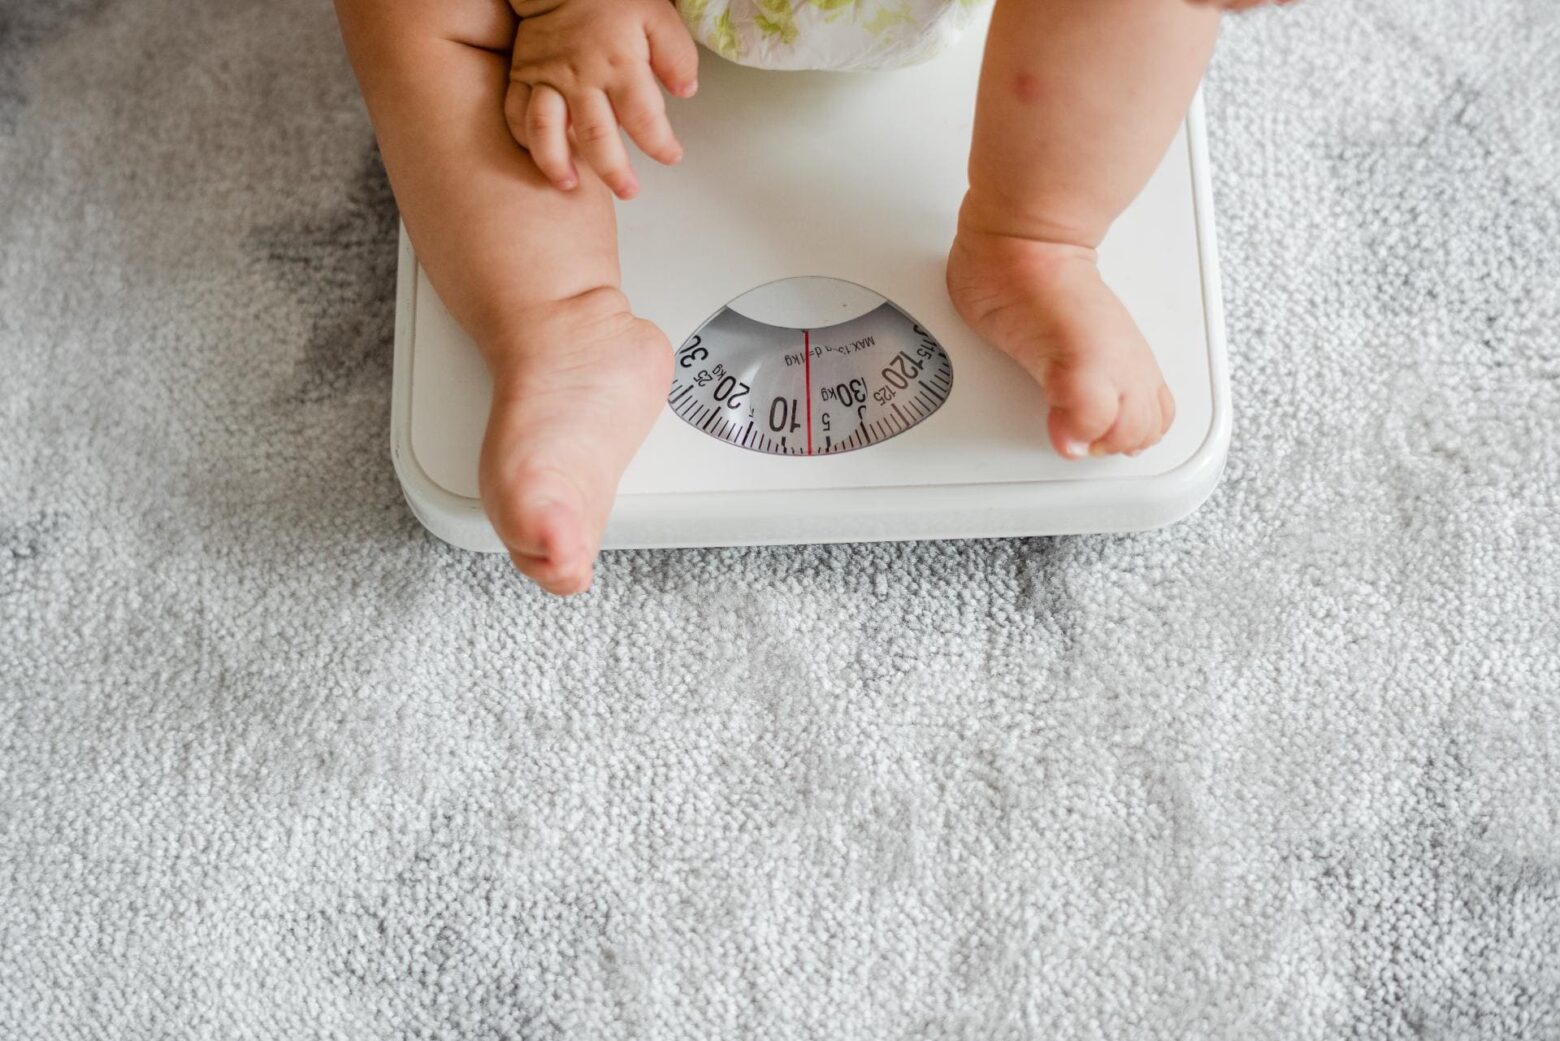 Abordagem humanizada da obesidade infantil